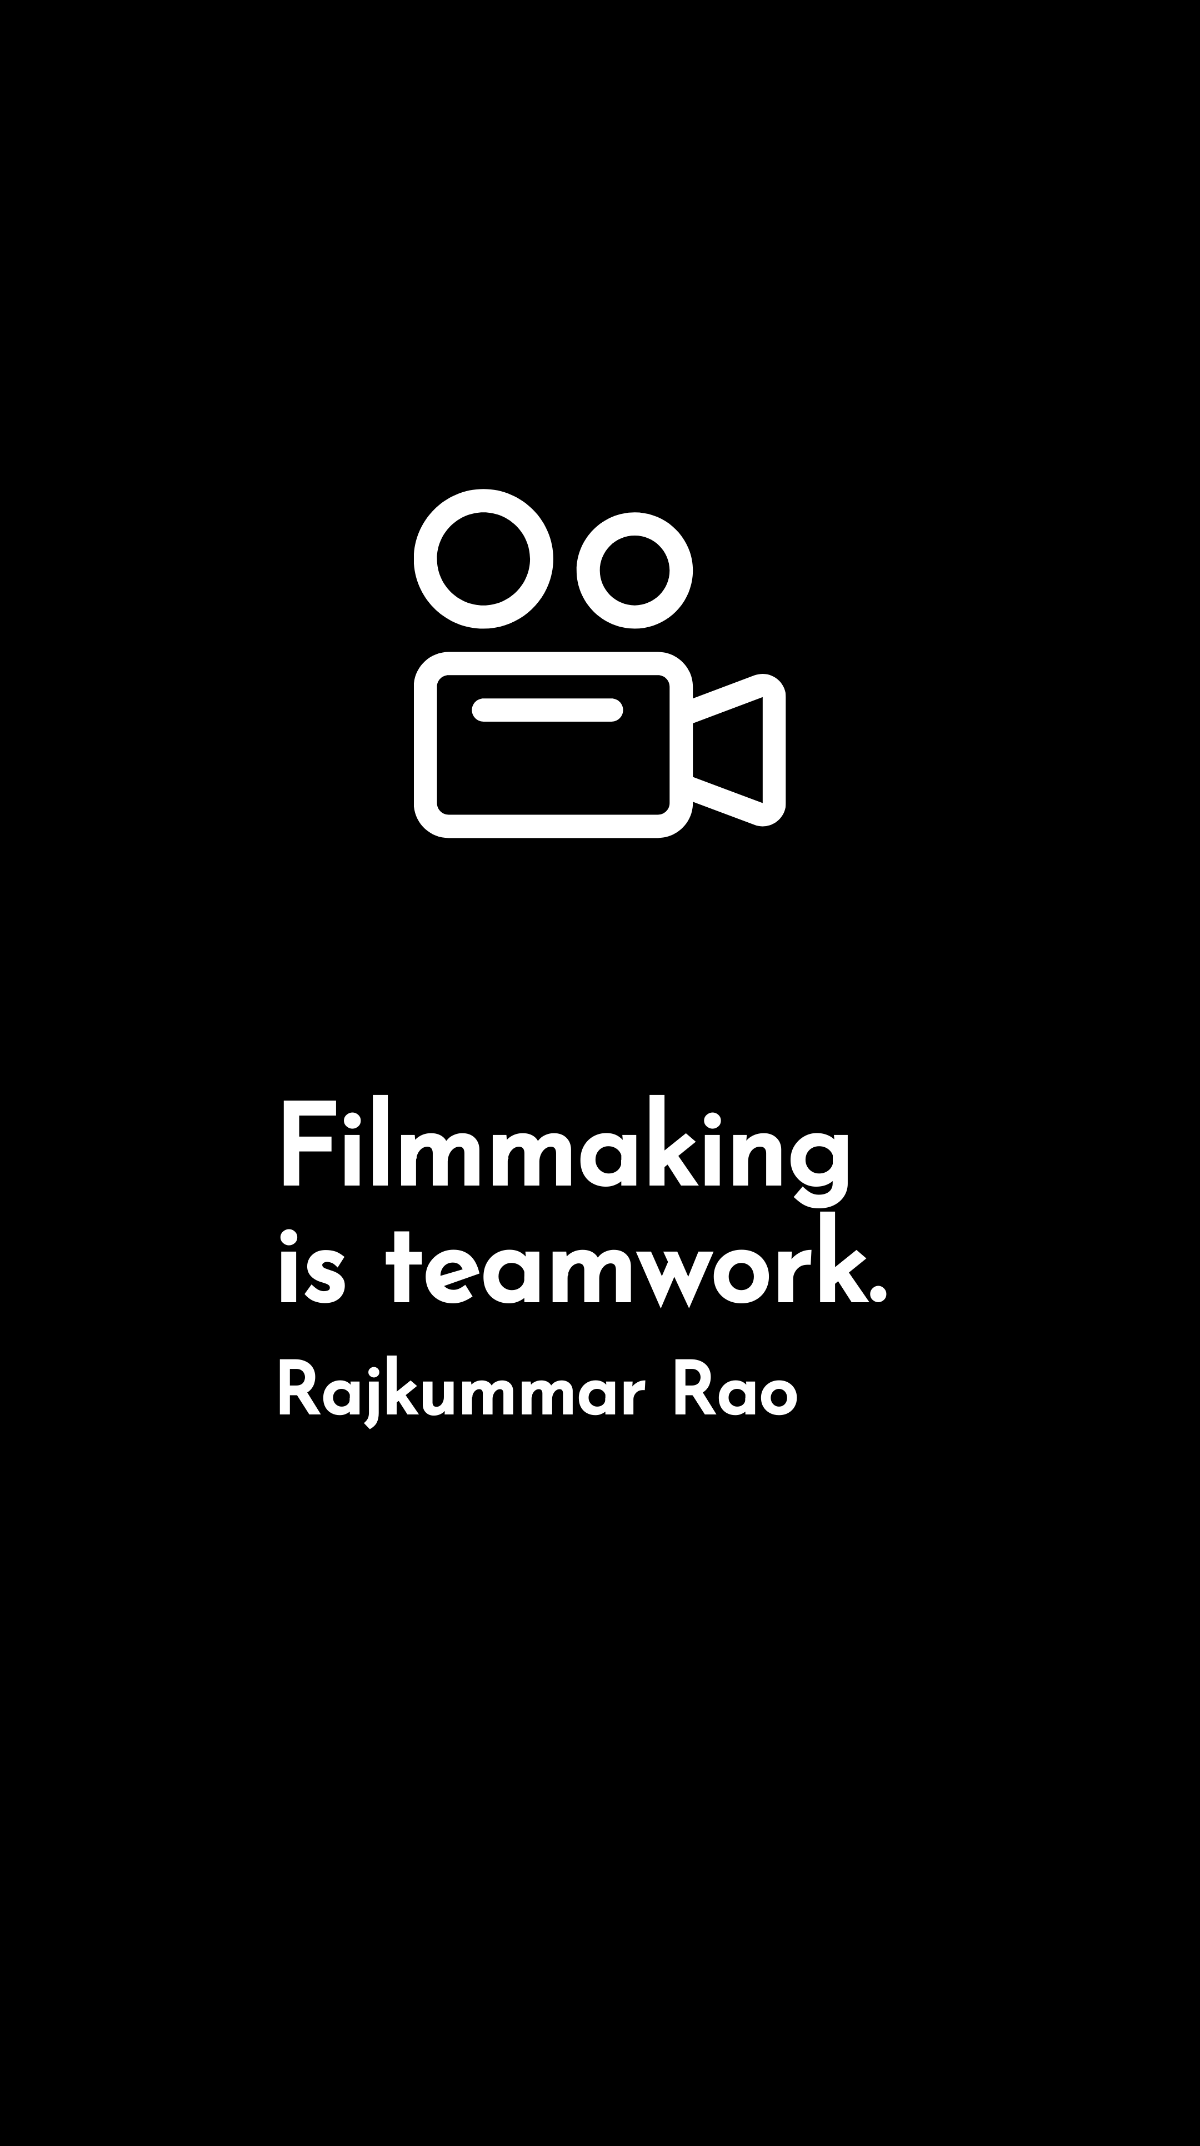 Rajkummar Rao - Filmmaking is teamwork. Template